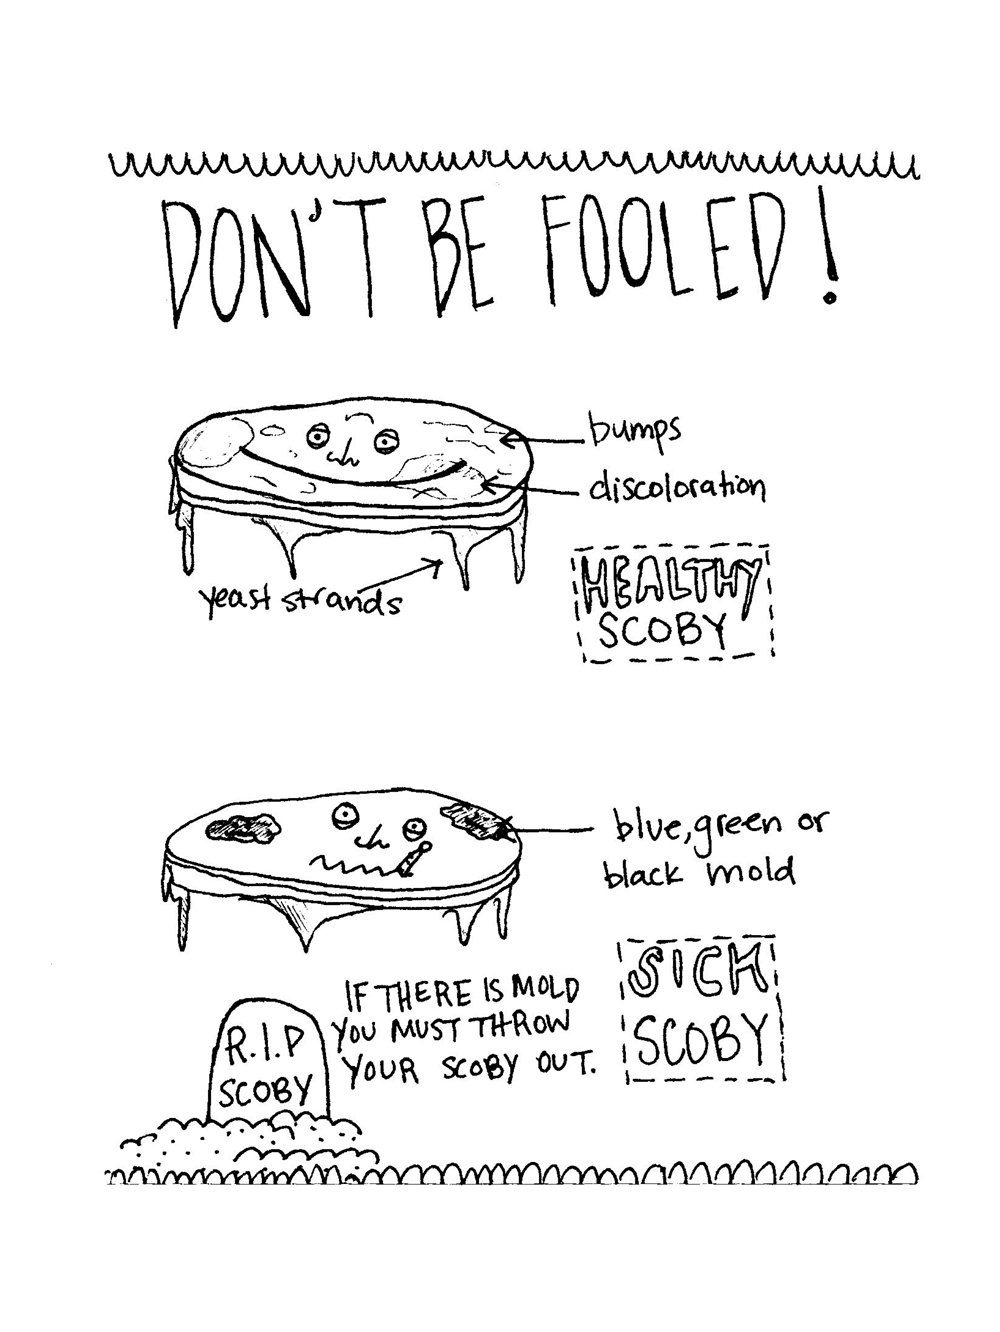 Don't Be Fooled - Healthy vs Sick Kombucha. Illustration by Lila Volkas